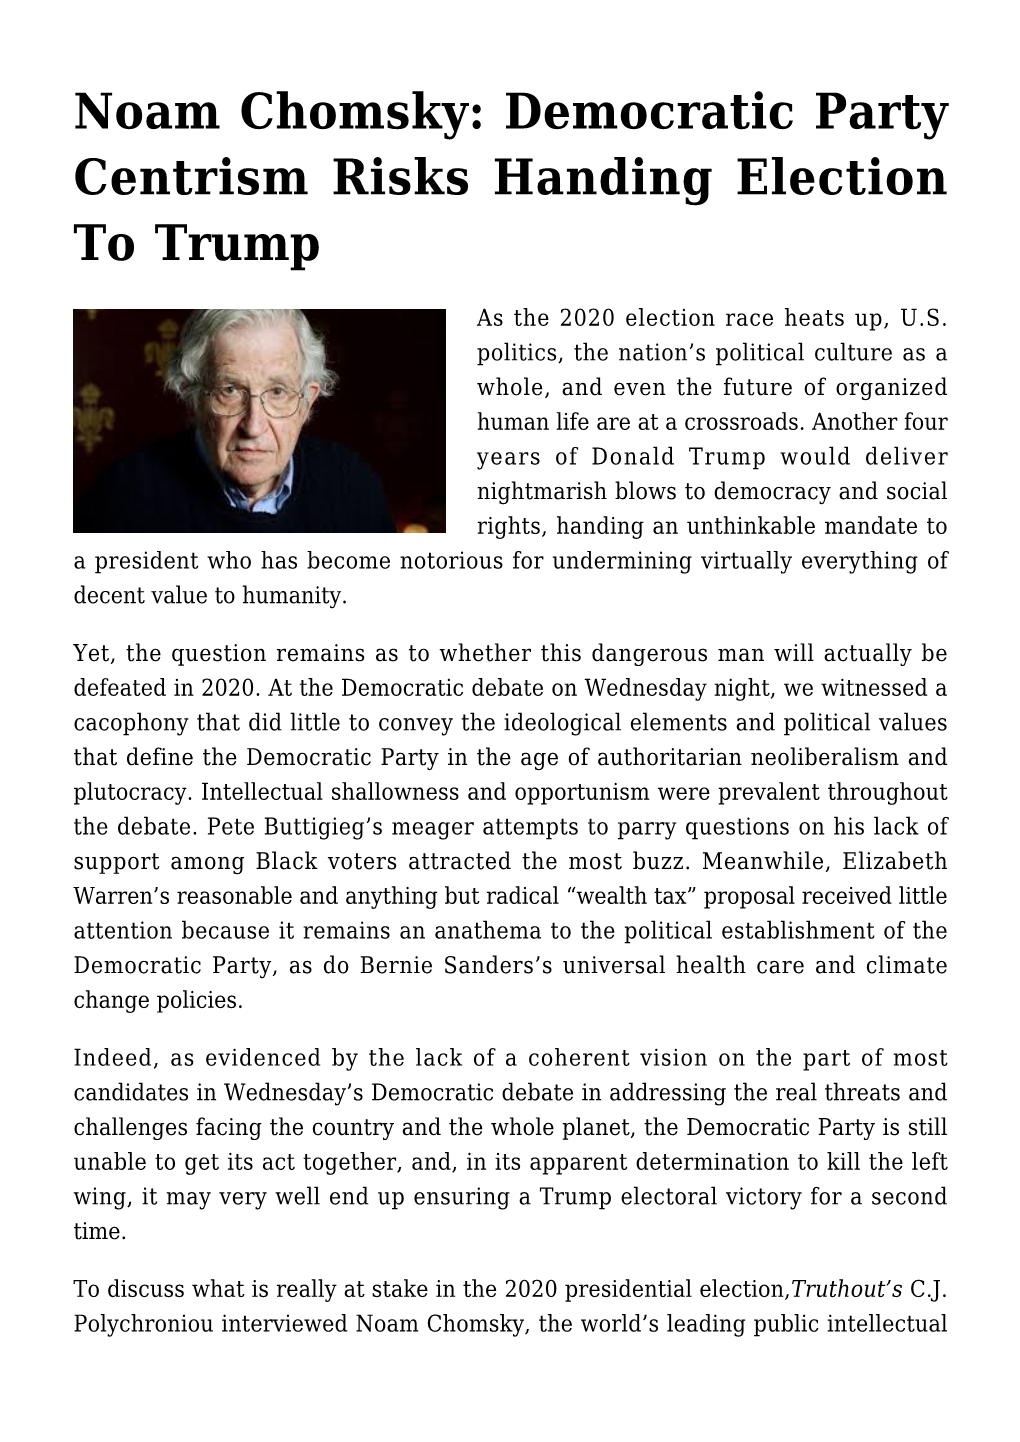 Noam Chomsky: Democratic Party Centrism Risks Handing Election to Trump